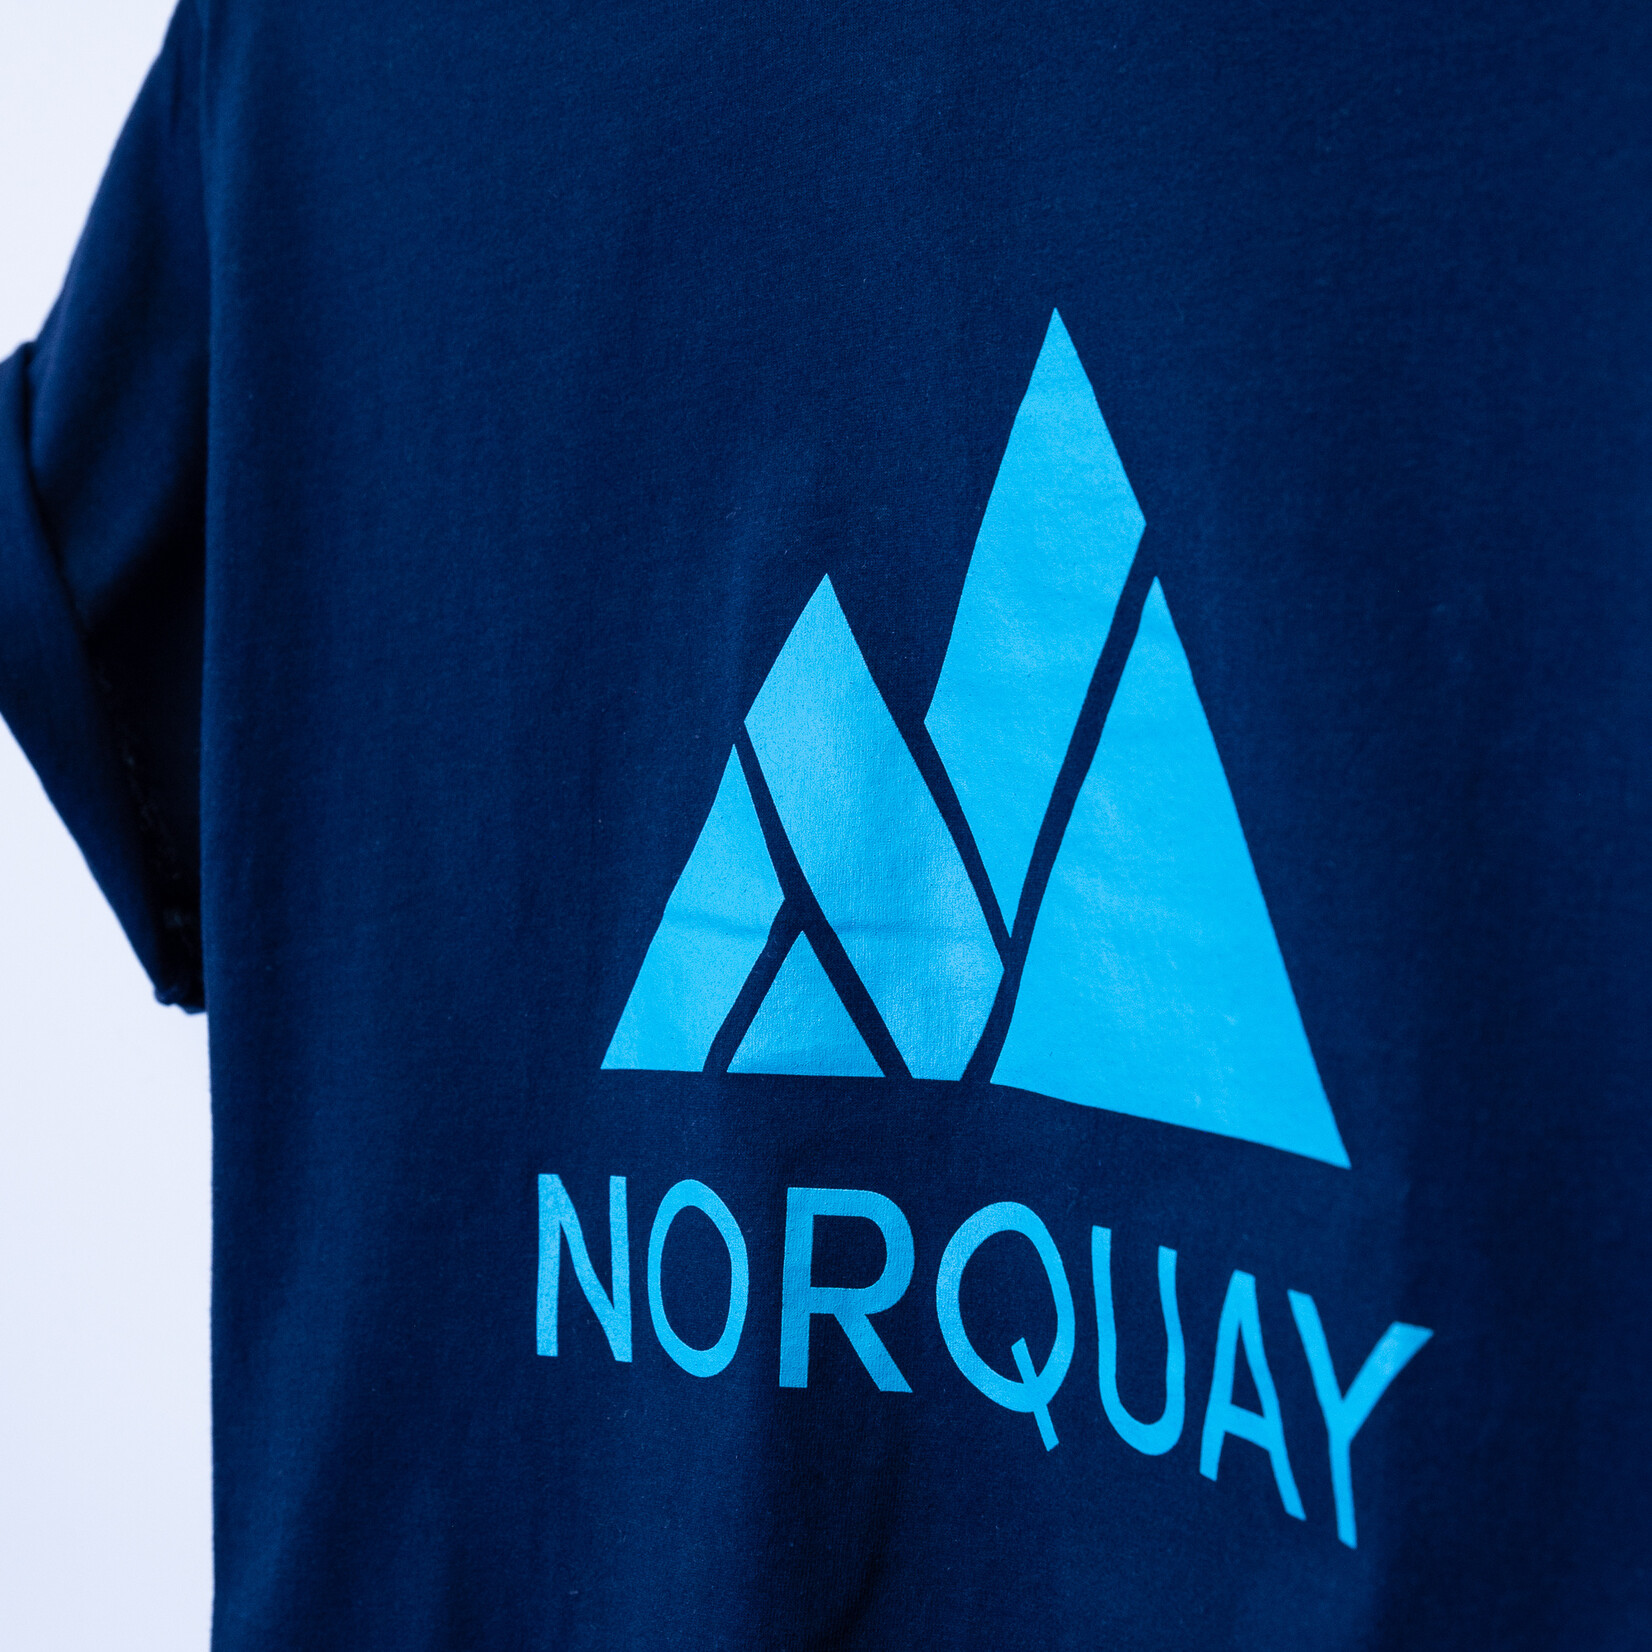 Mt Norquay Mt Norquay Ski Resort Logo T-Shirt